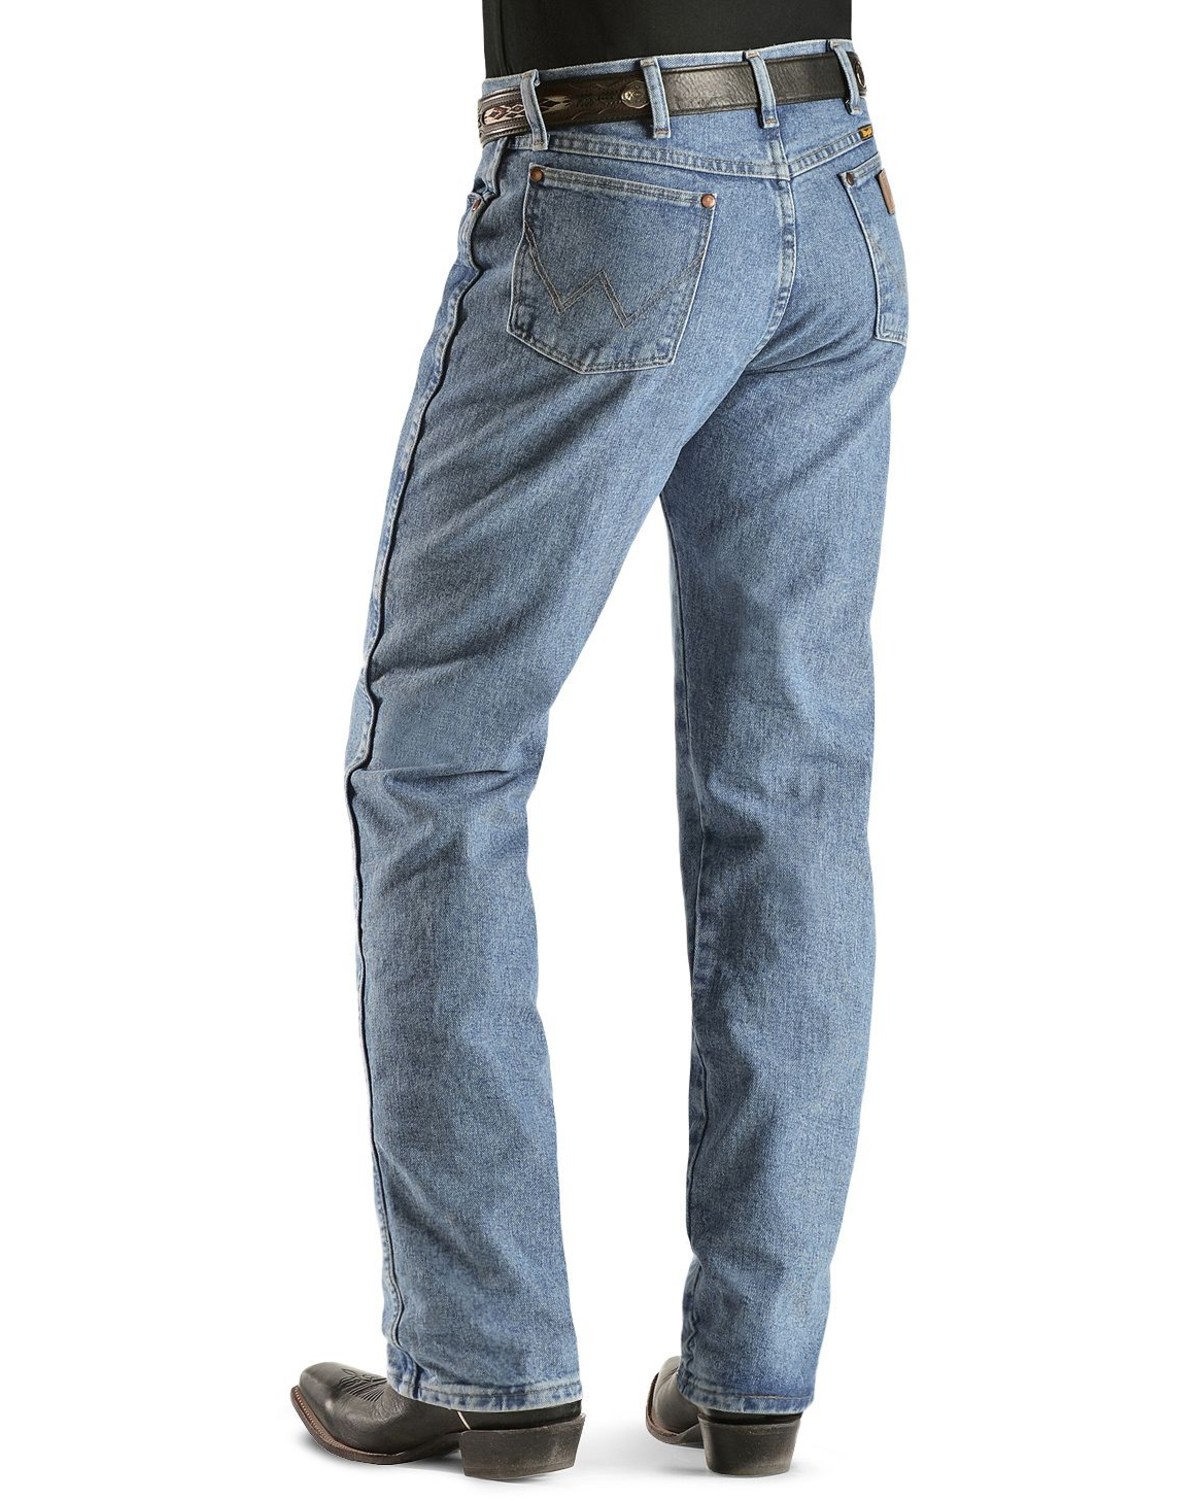 Wrangler Men's 13MWZ Jeans Cowboy Cut Original Fit Prewashed